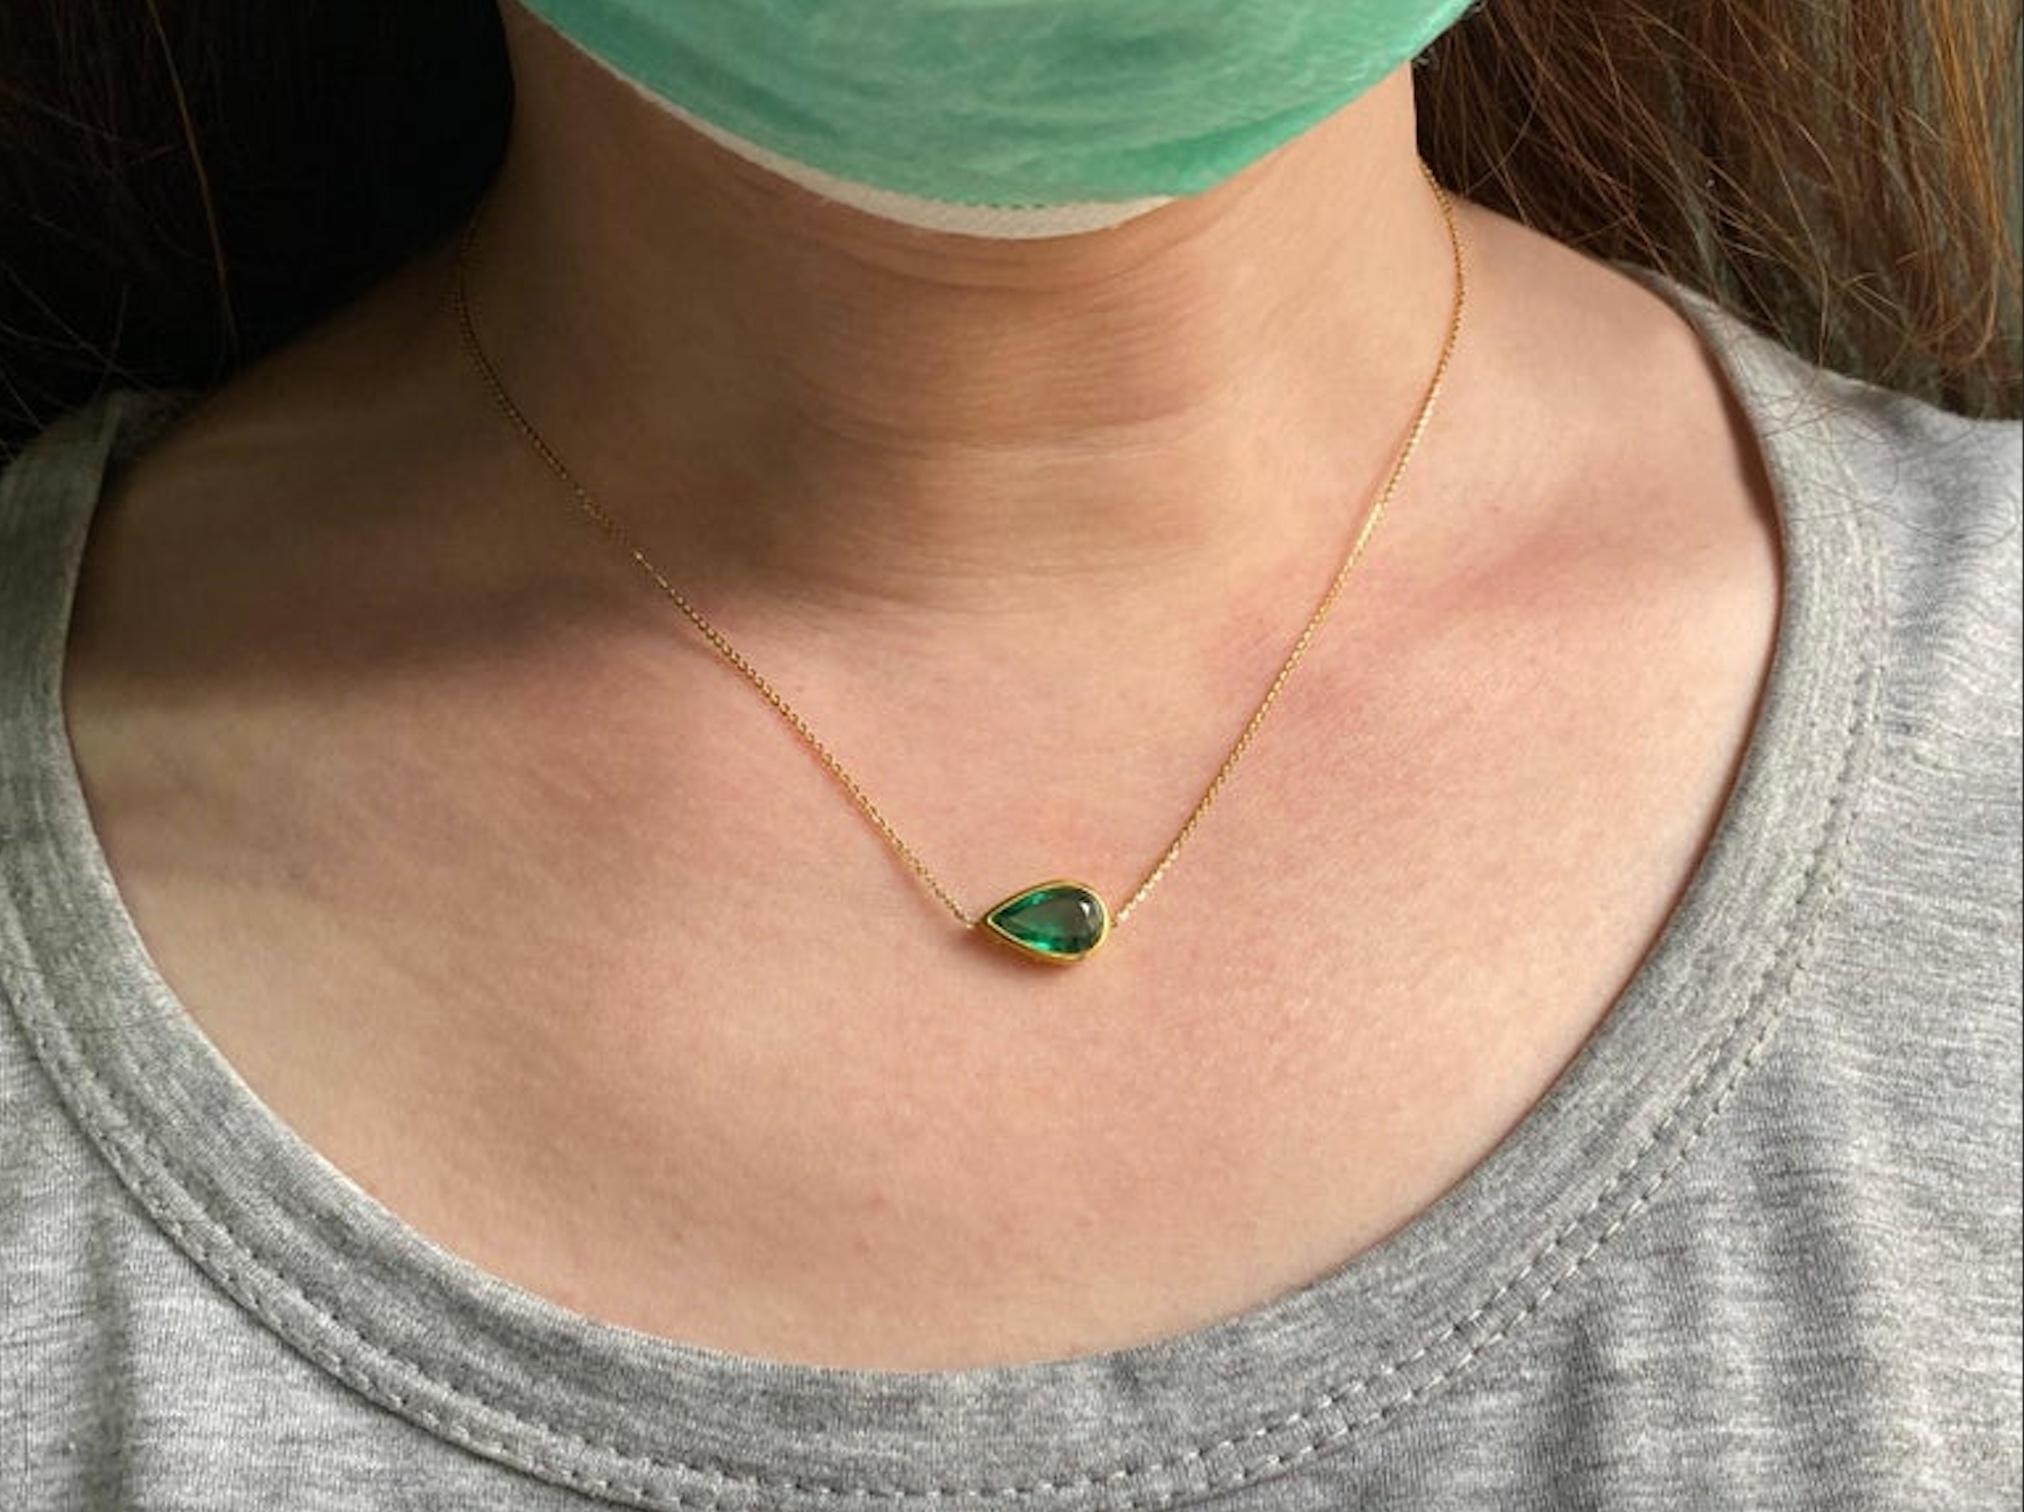 Pear Cut Certified 1.65 Carat Pear Shape Emerald Pendant Chain Necklace For Sale